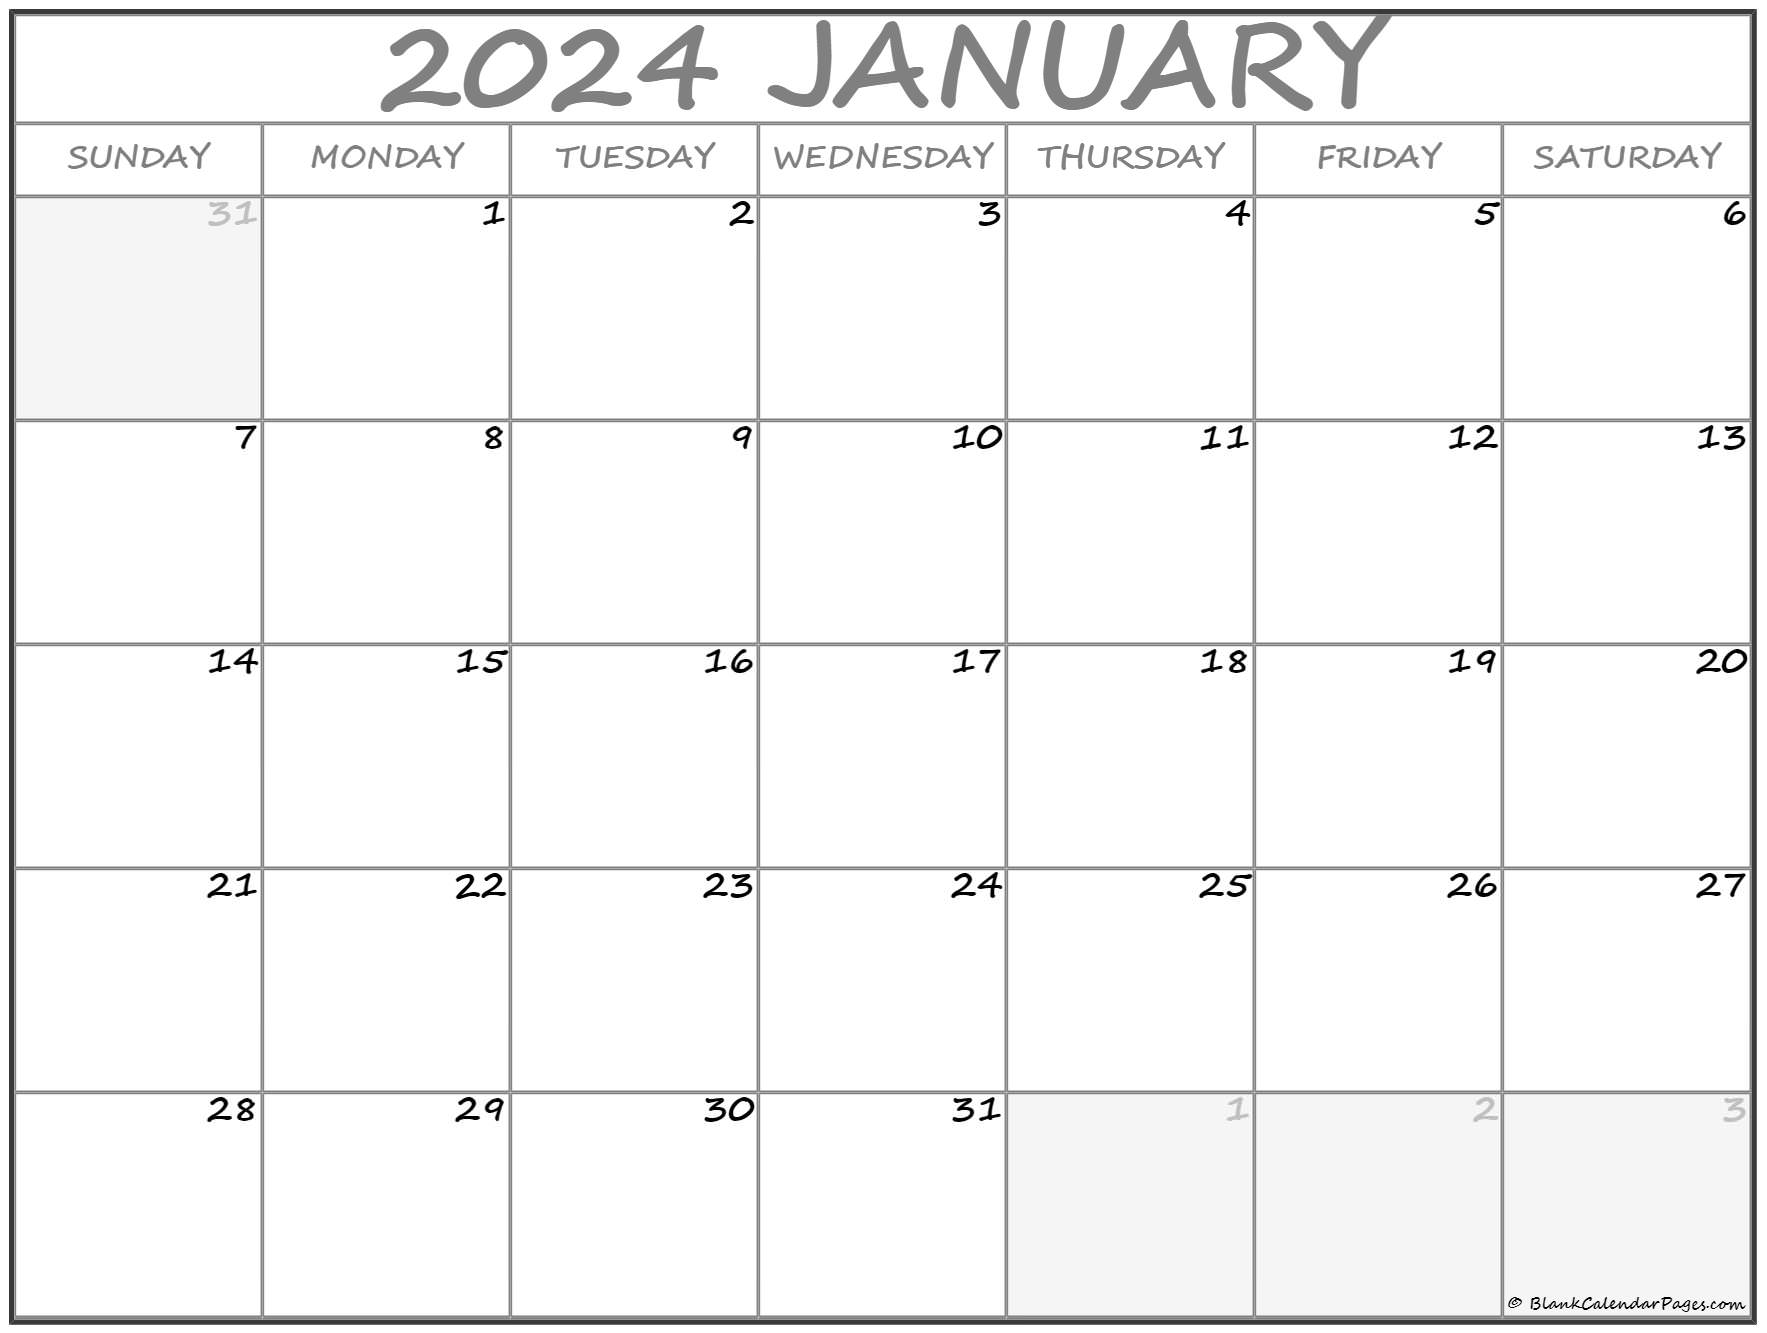 january-2024-calendar-google-sheets-best-latest-famous-calendar-january-2024